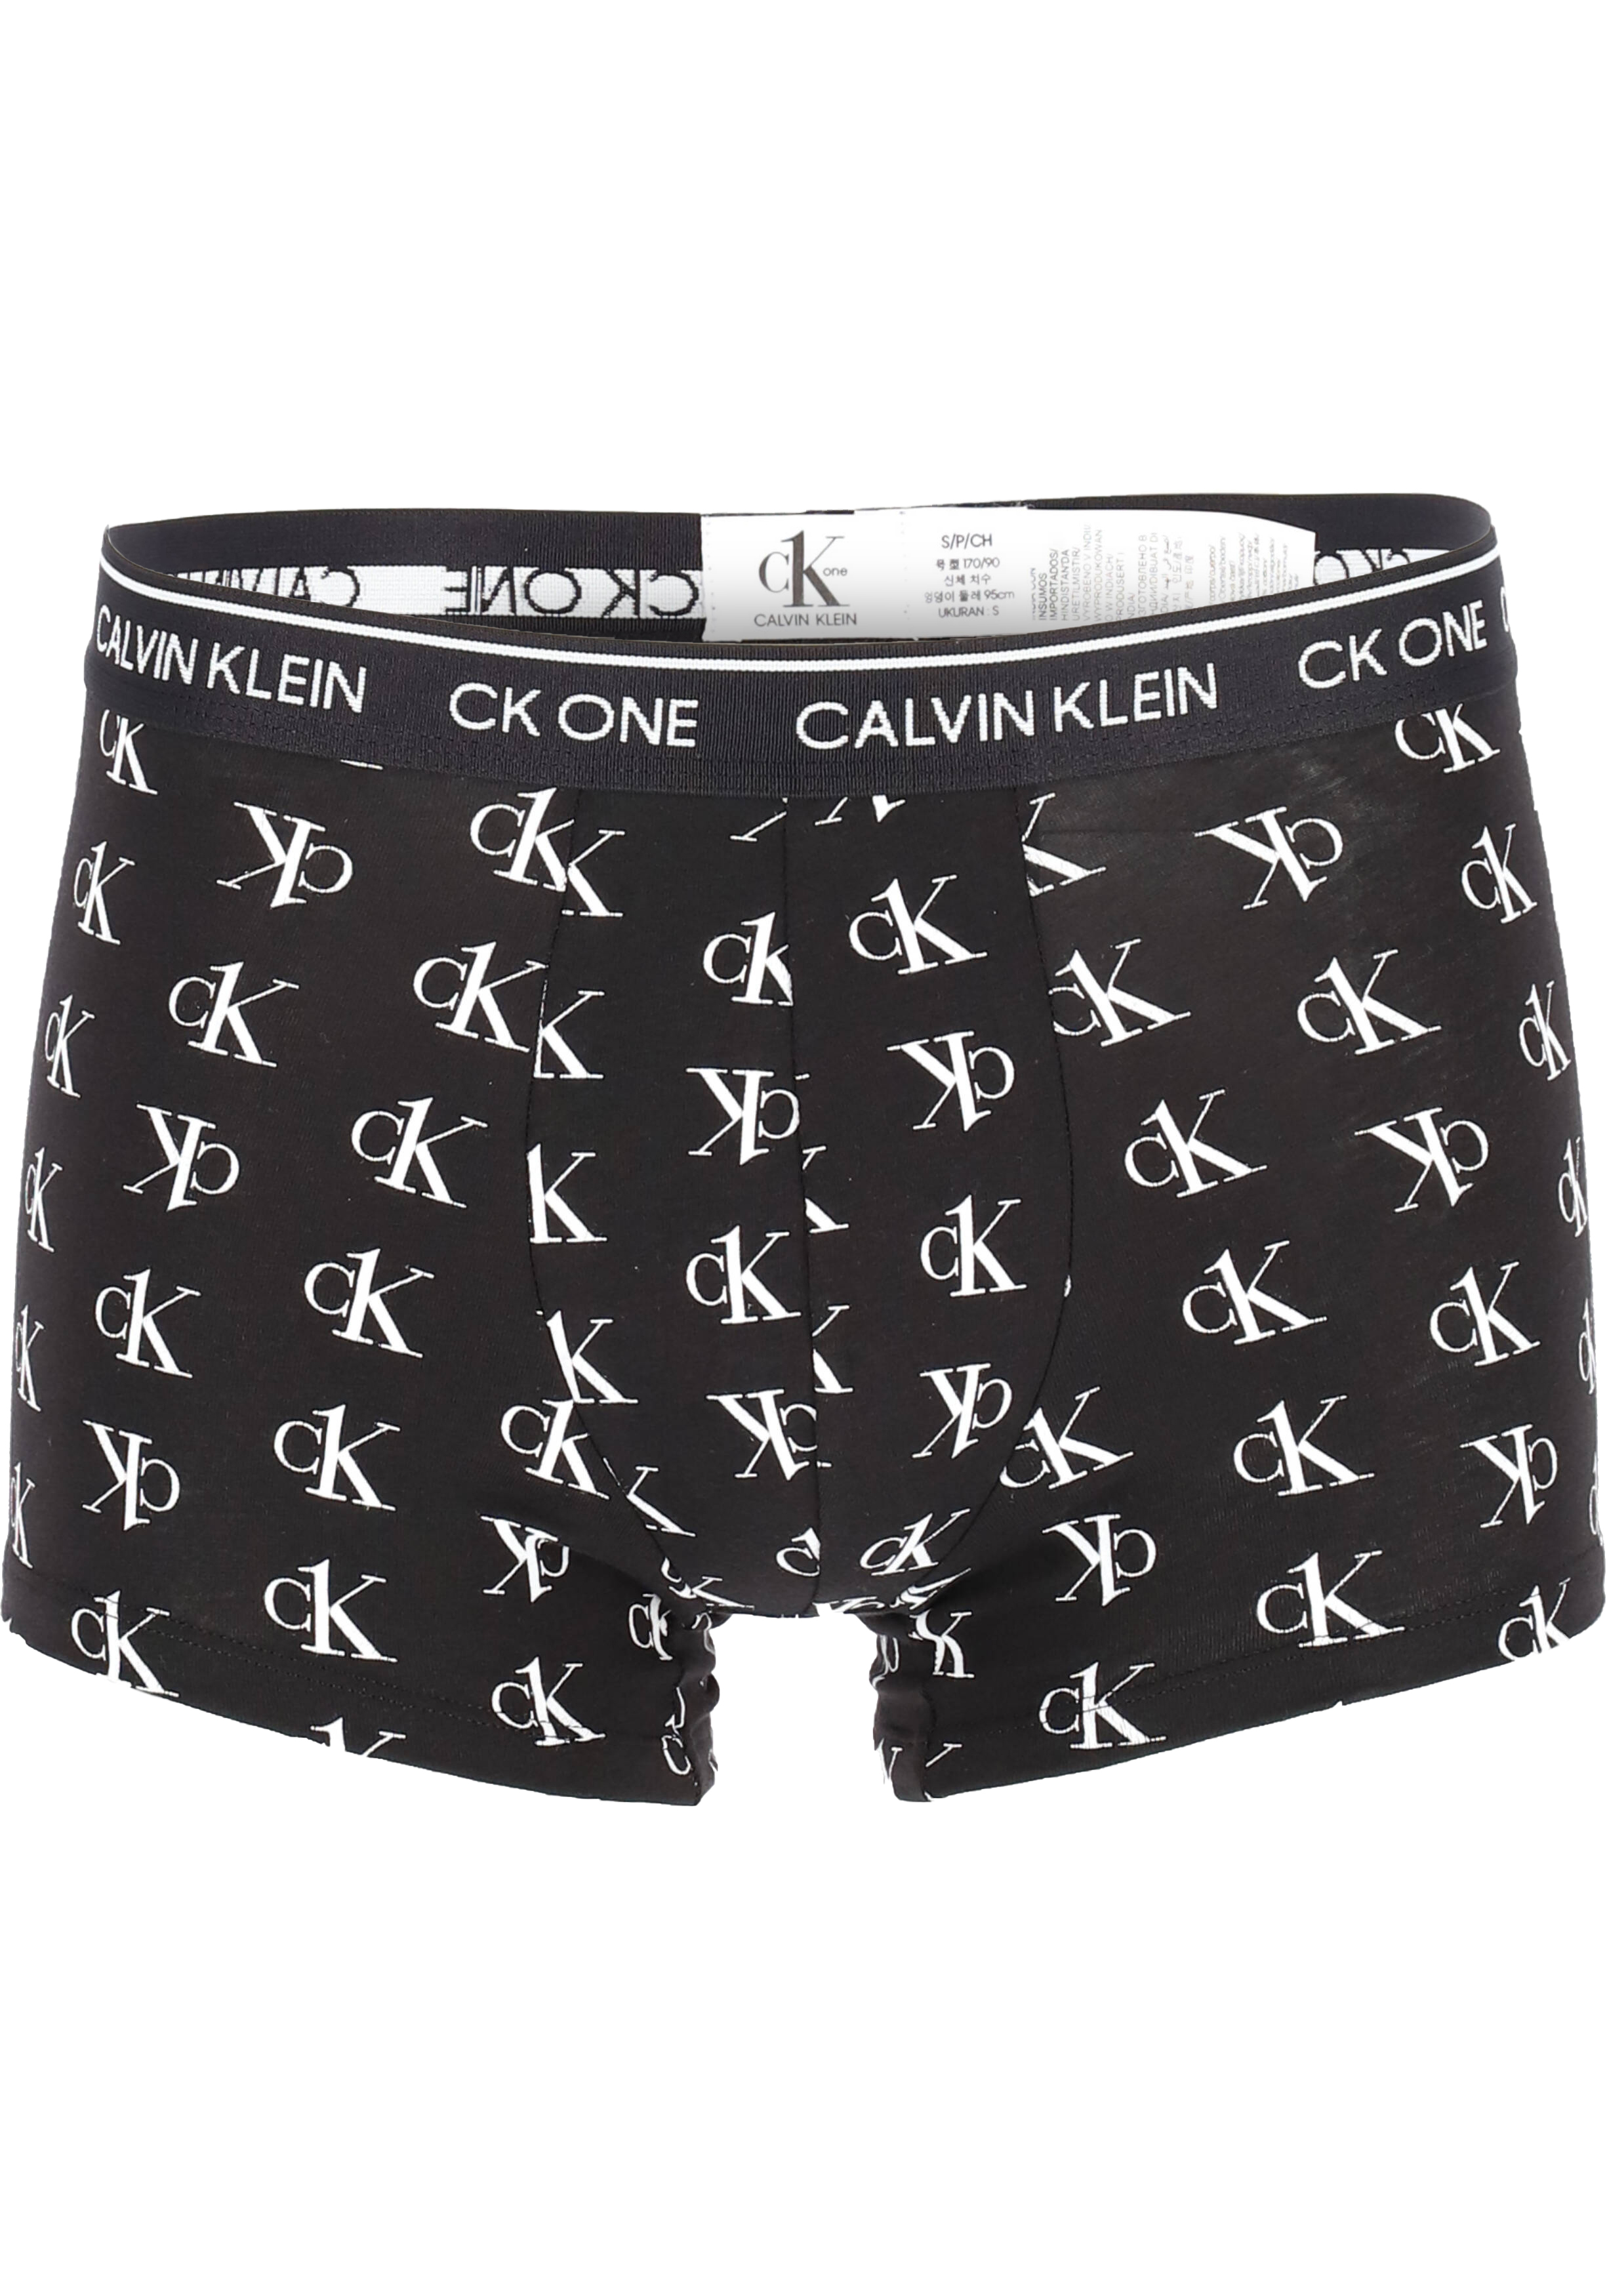 Calvin Klein CK ONE Cotton trunk (1-pack), heren boxer normale lengte, zwart met logo print